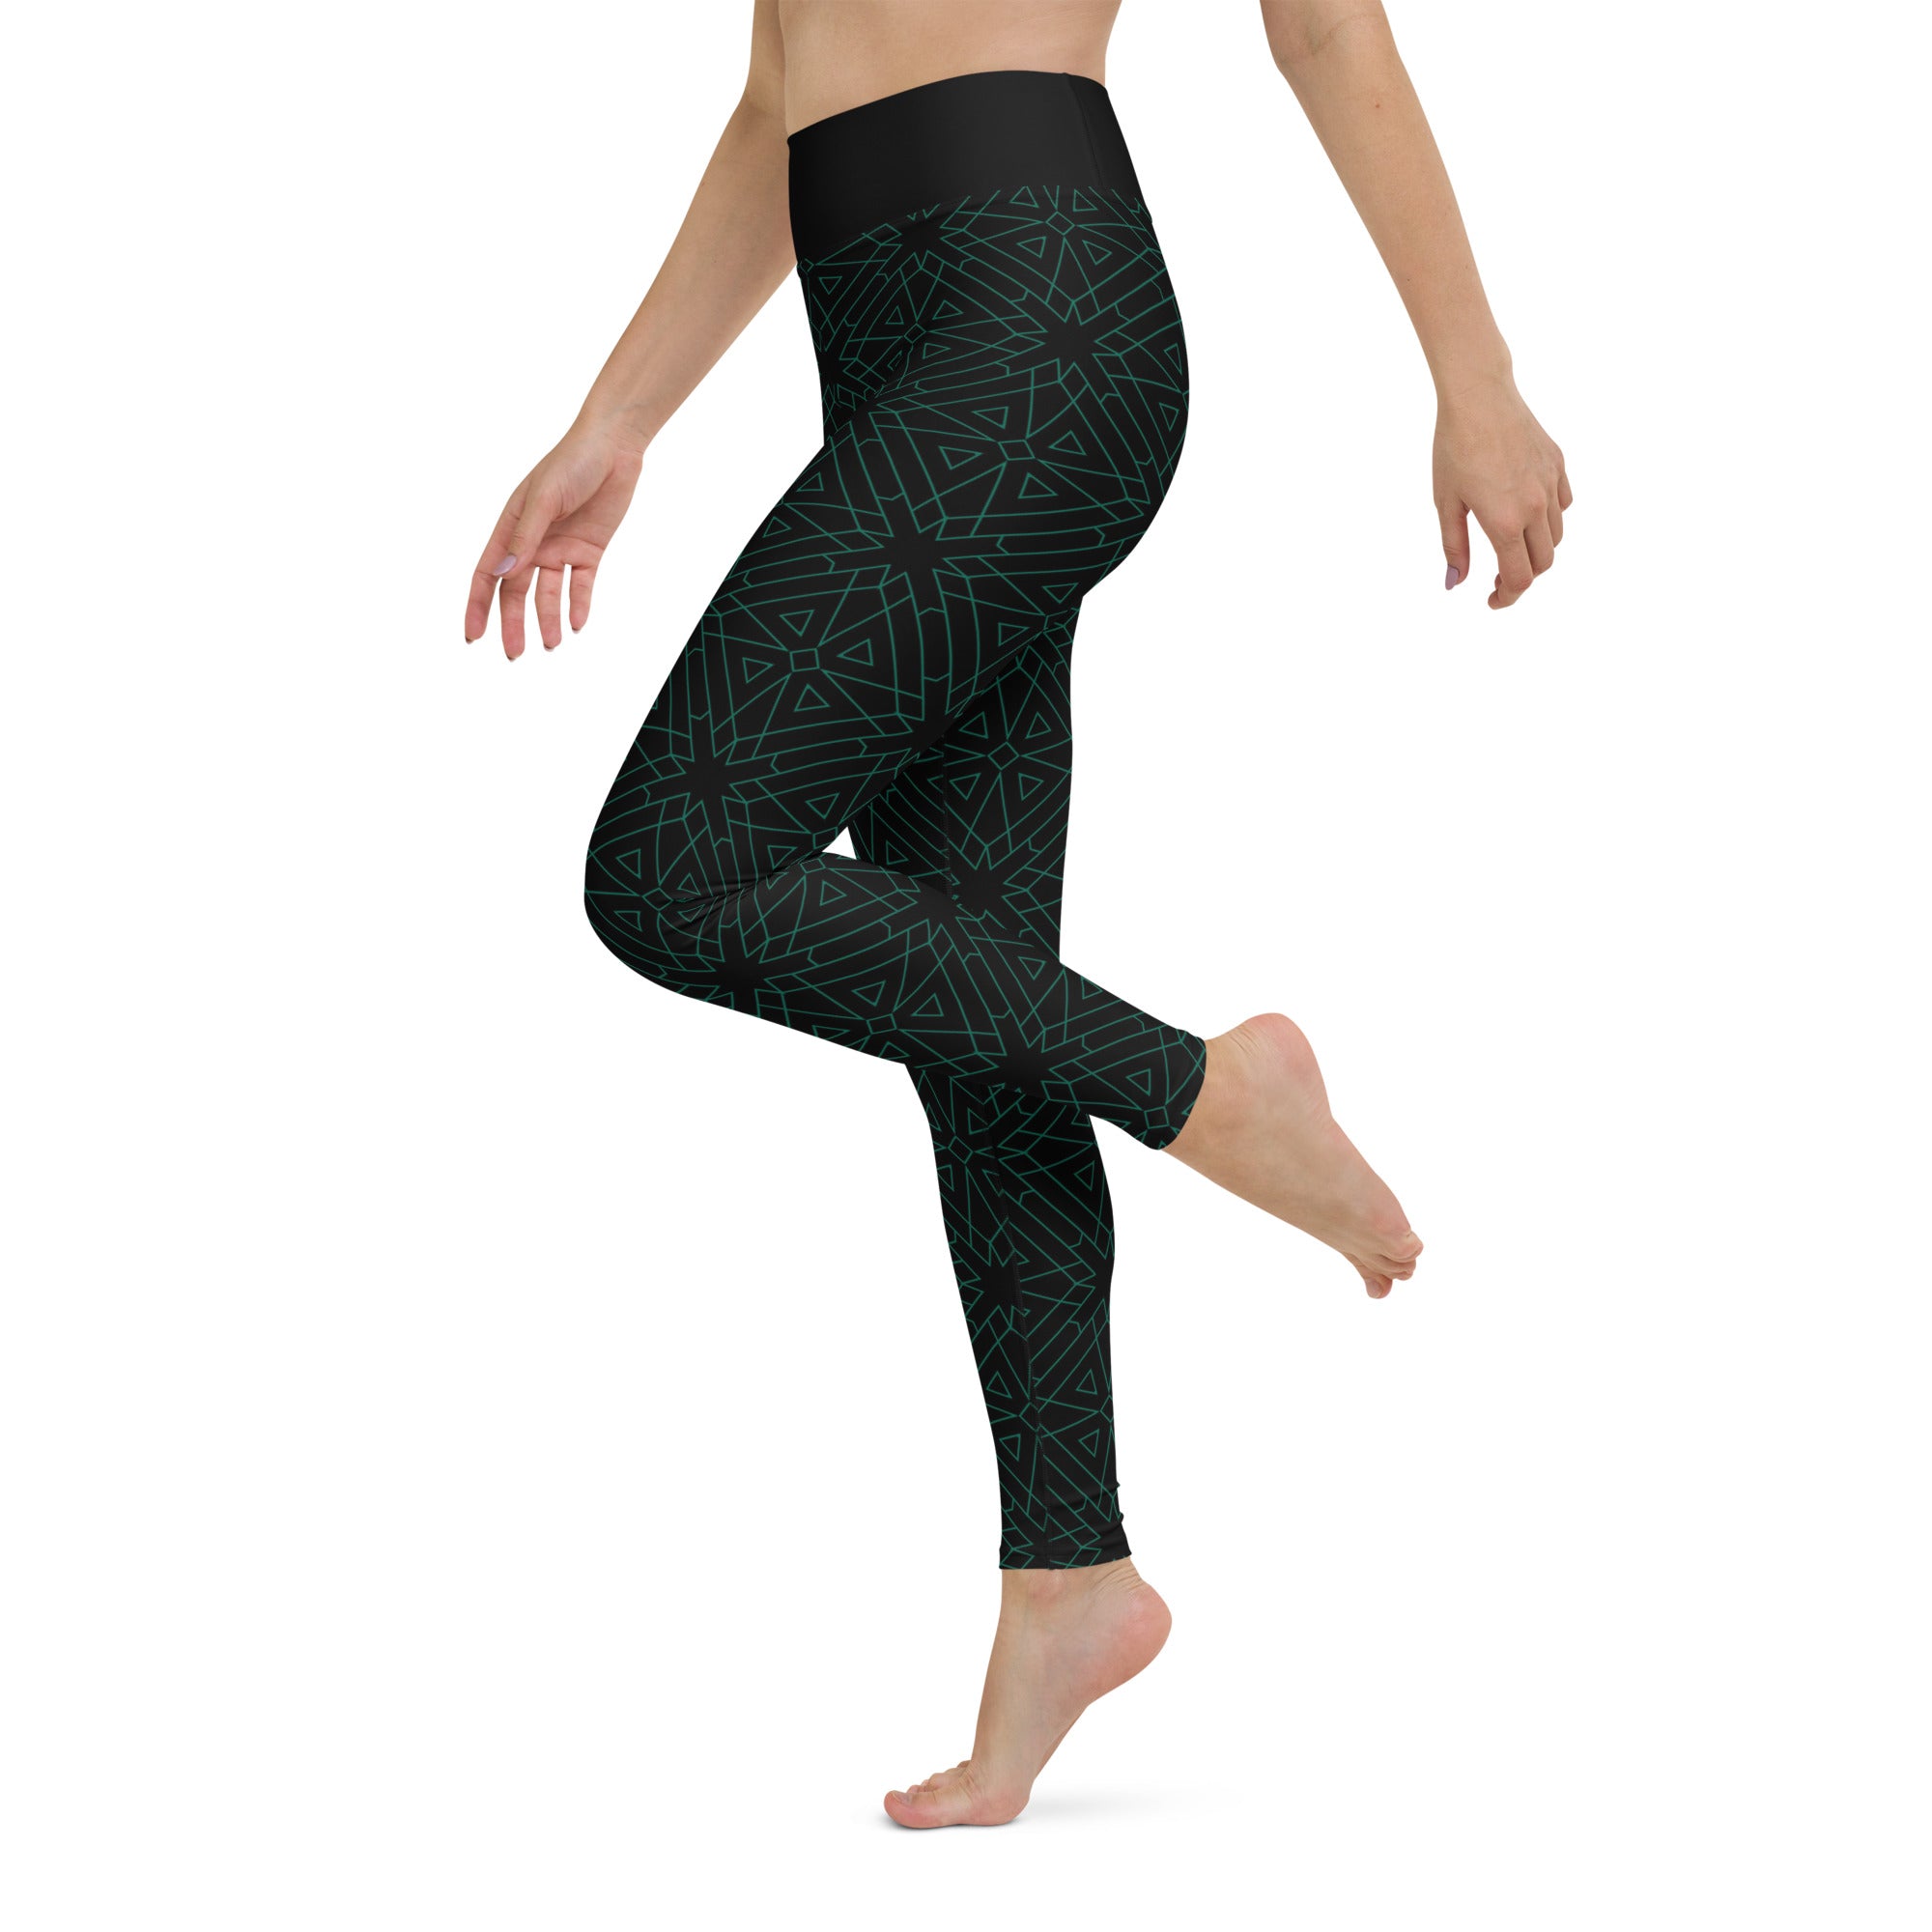 Eco-friendly Vibrant Vortex Yoga Leggings for active lifestyles.